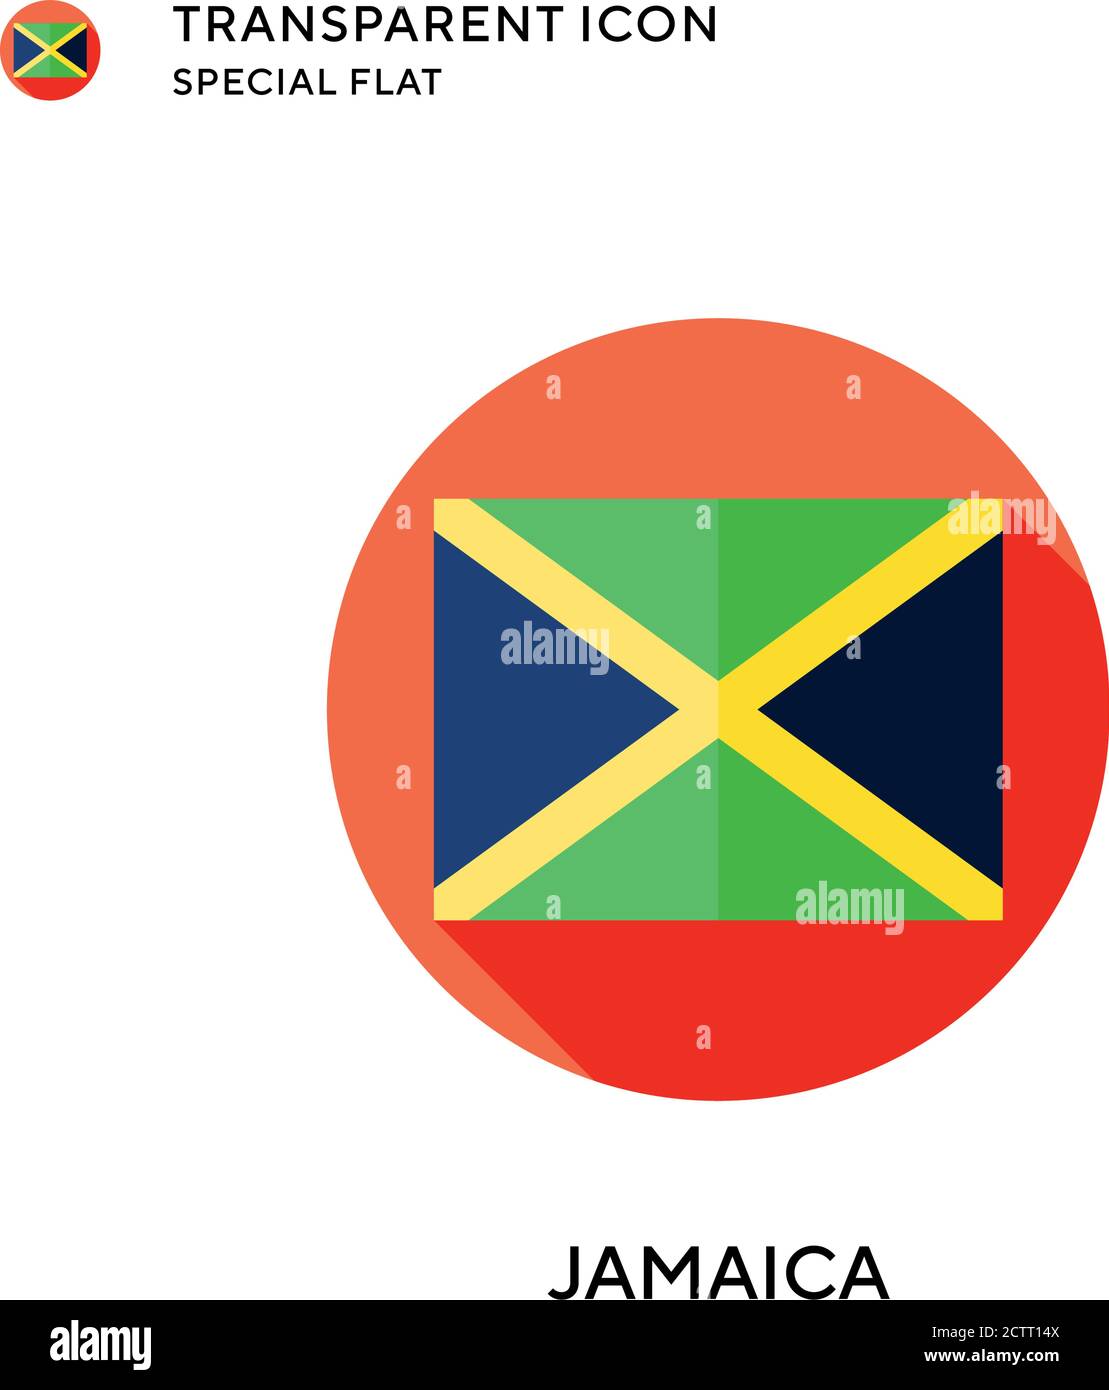 Jamaica vector icon. Flat style illustration. EPS 10 vector. Stock Vector